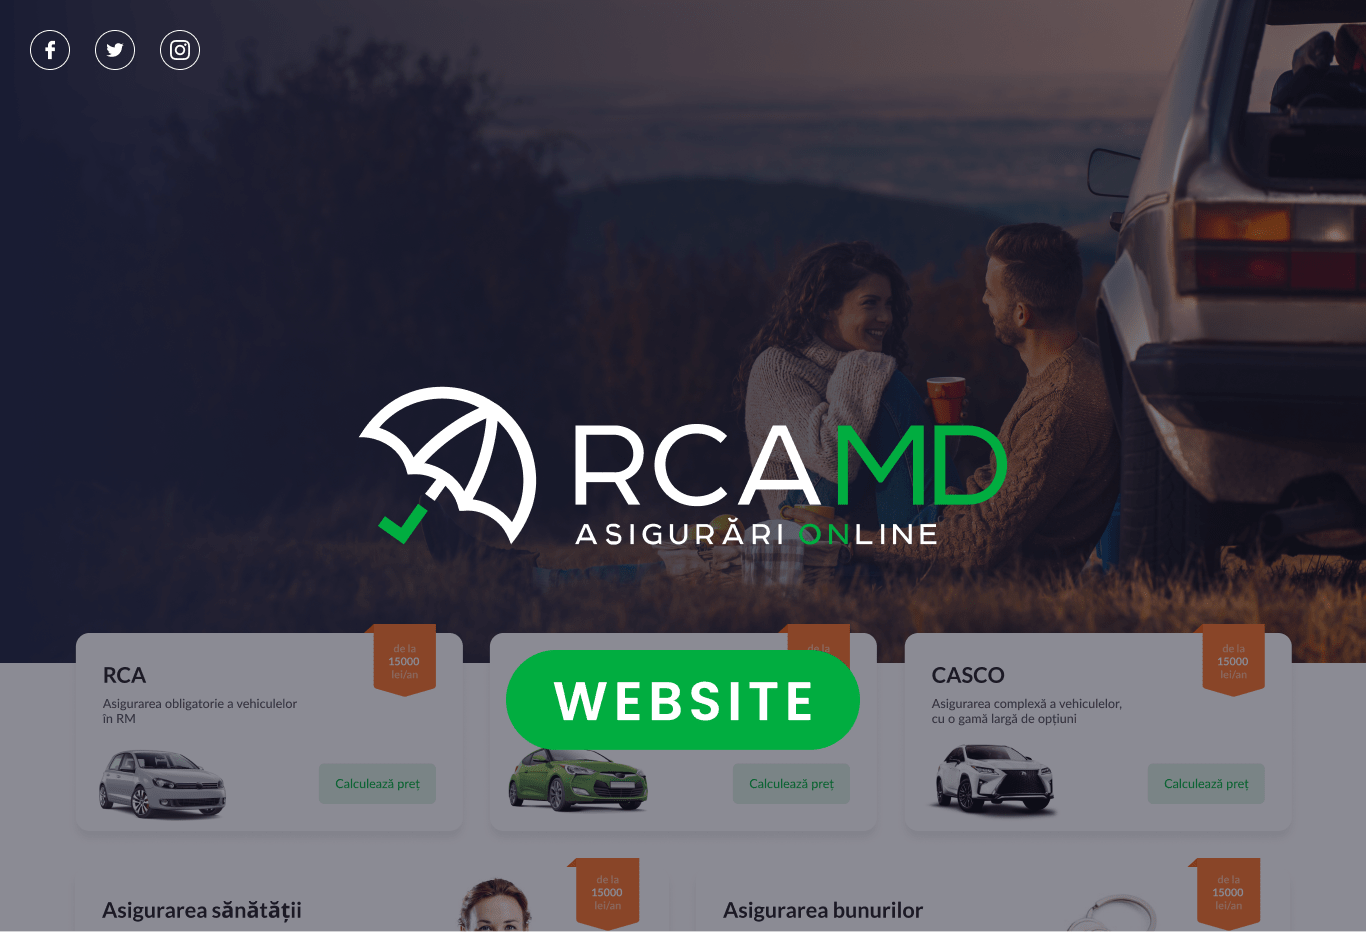 RCA MD website